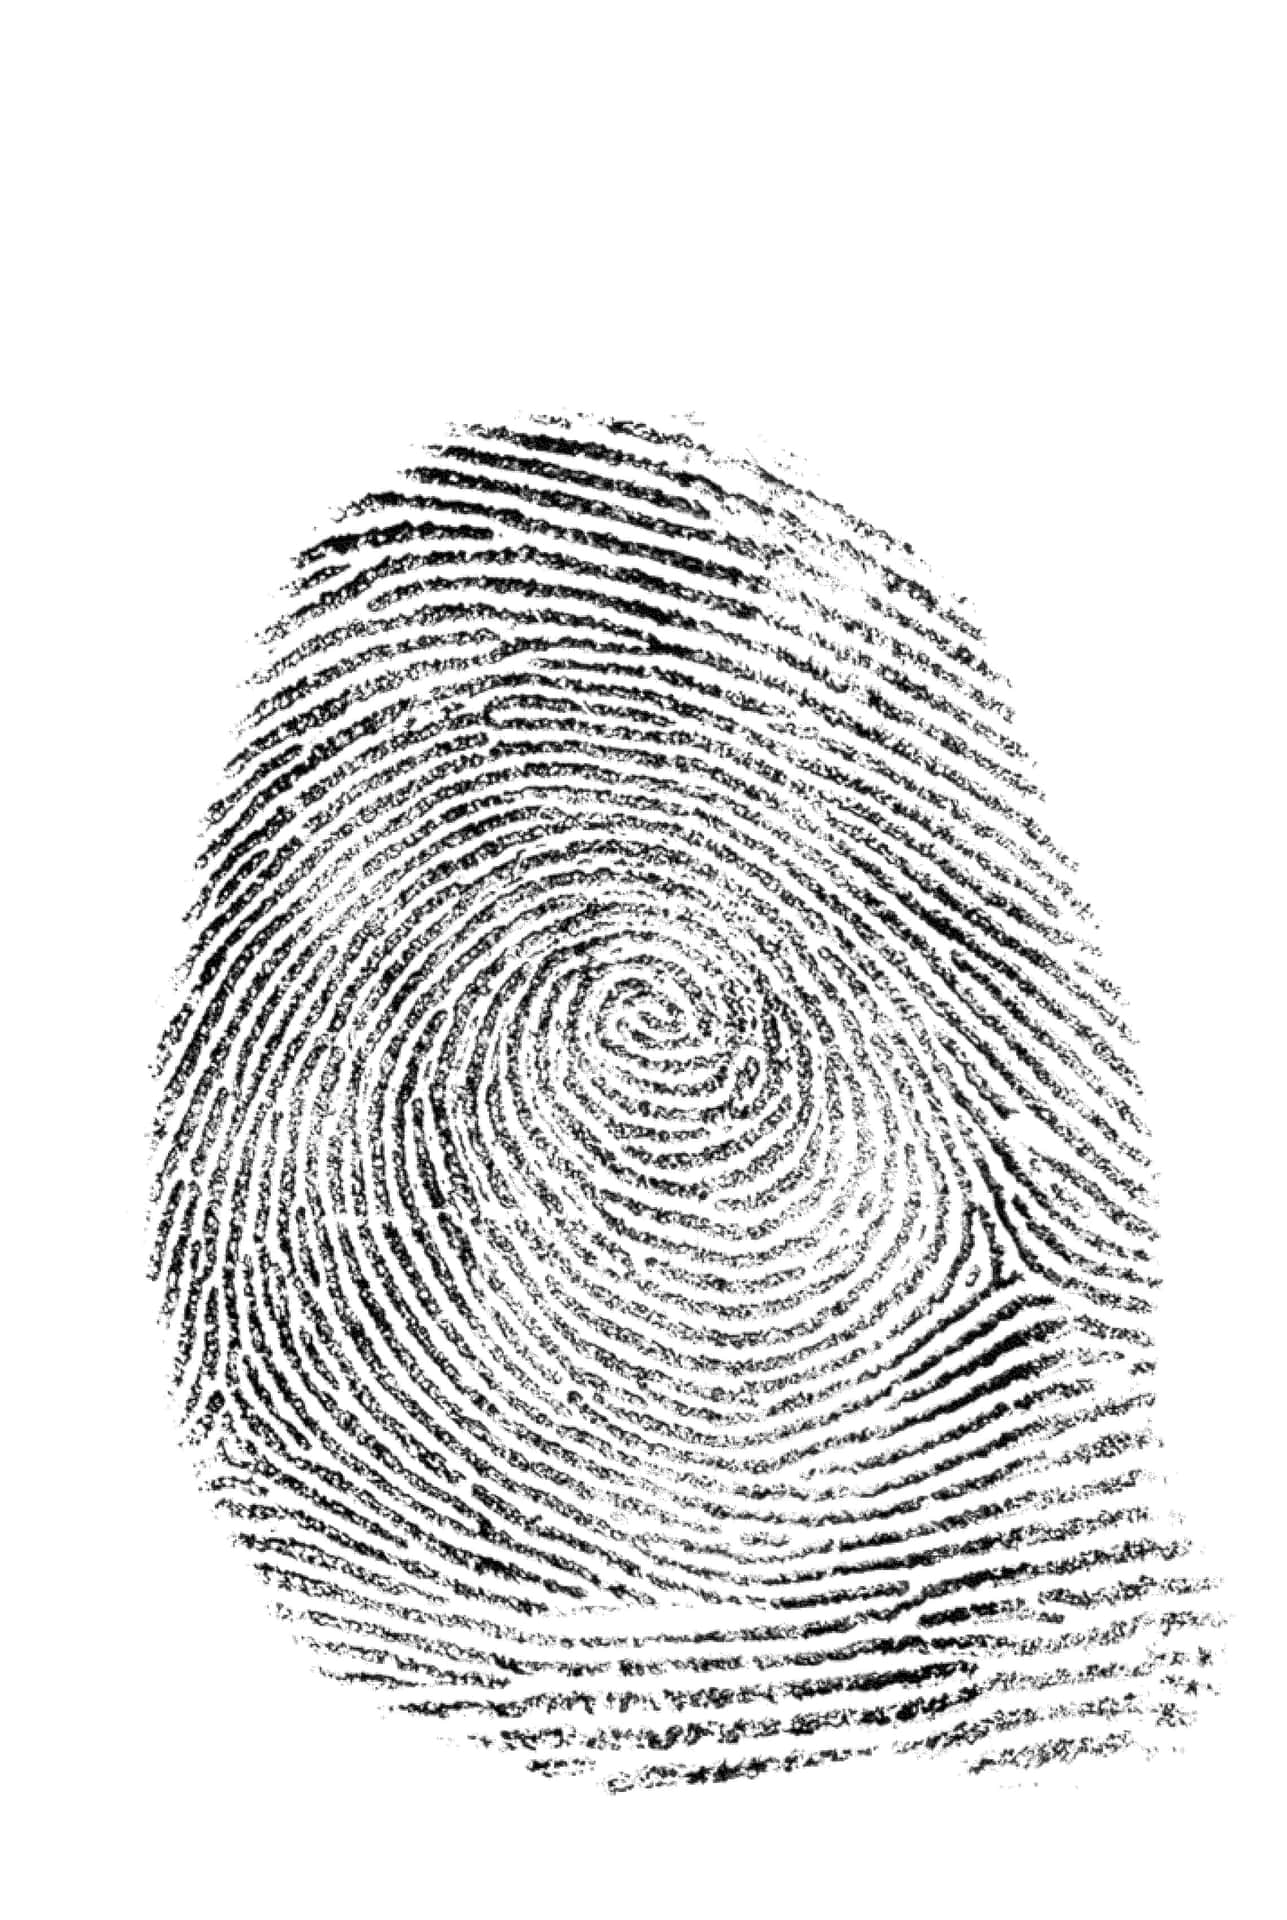 Close-up of a fingerprint on a textured surface.